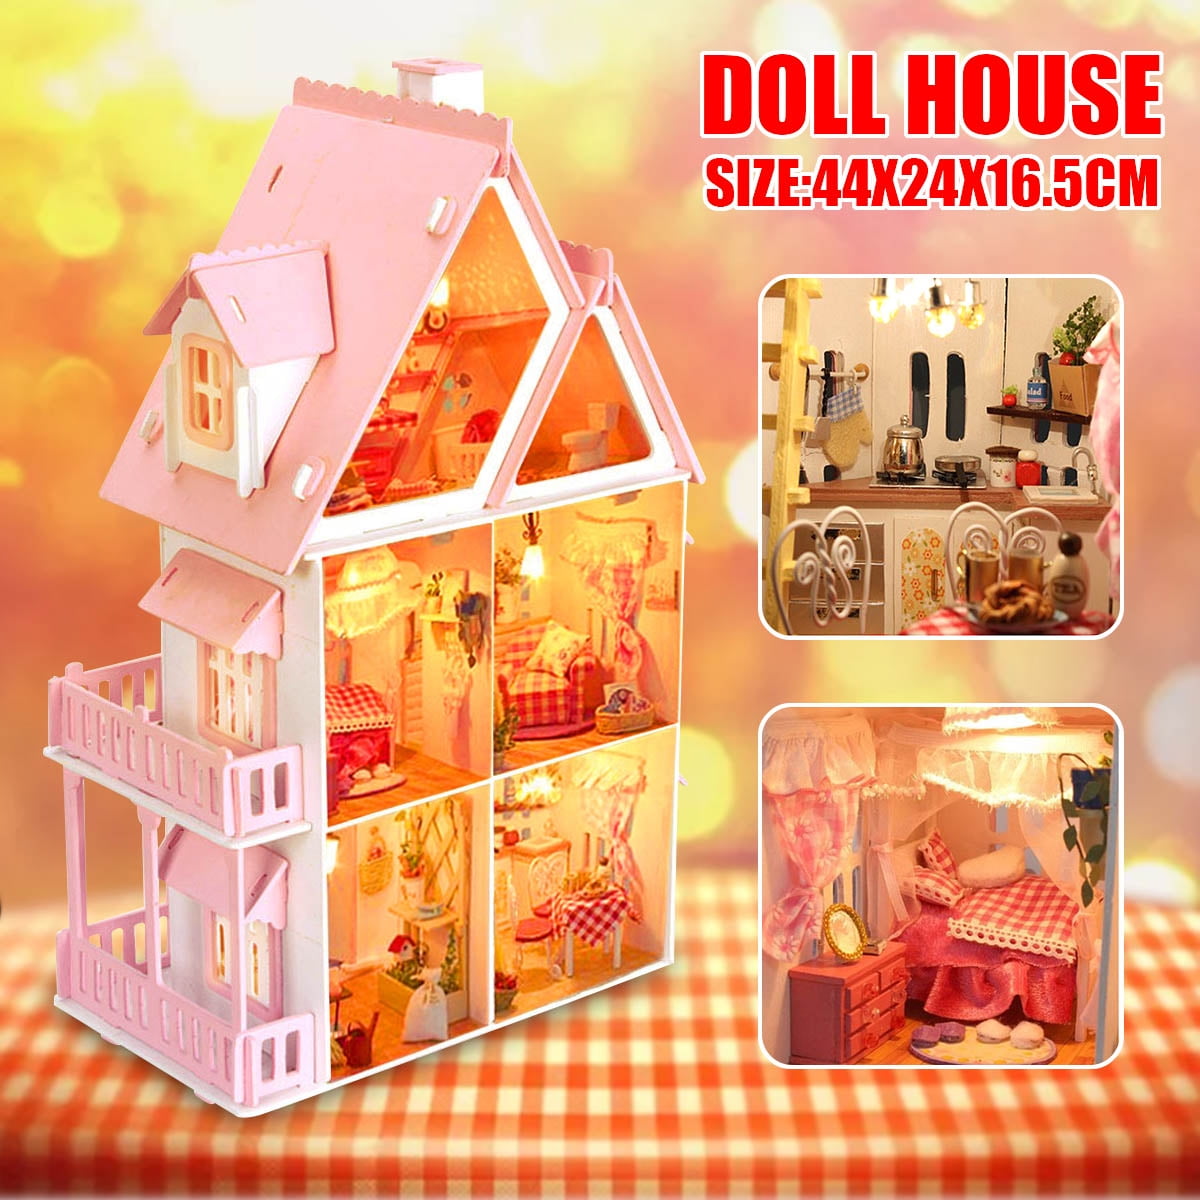 mini house toy kit